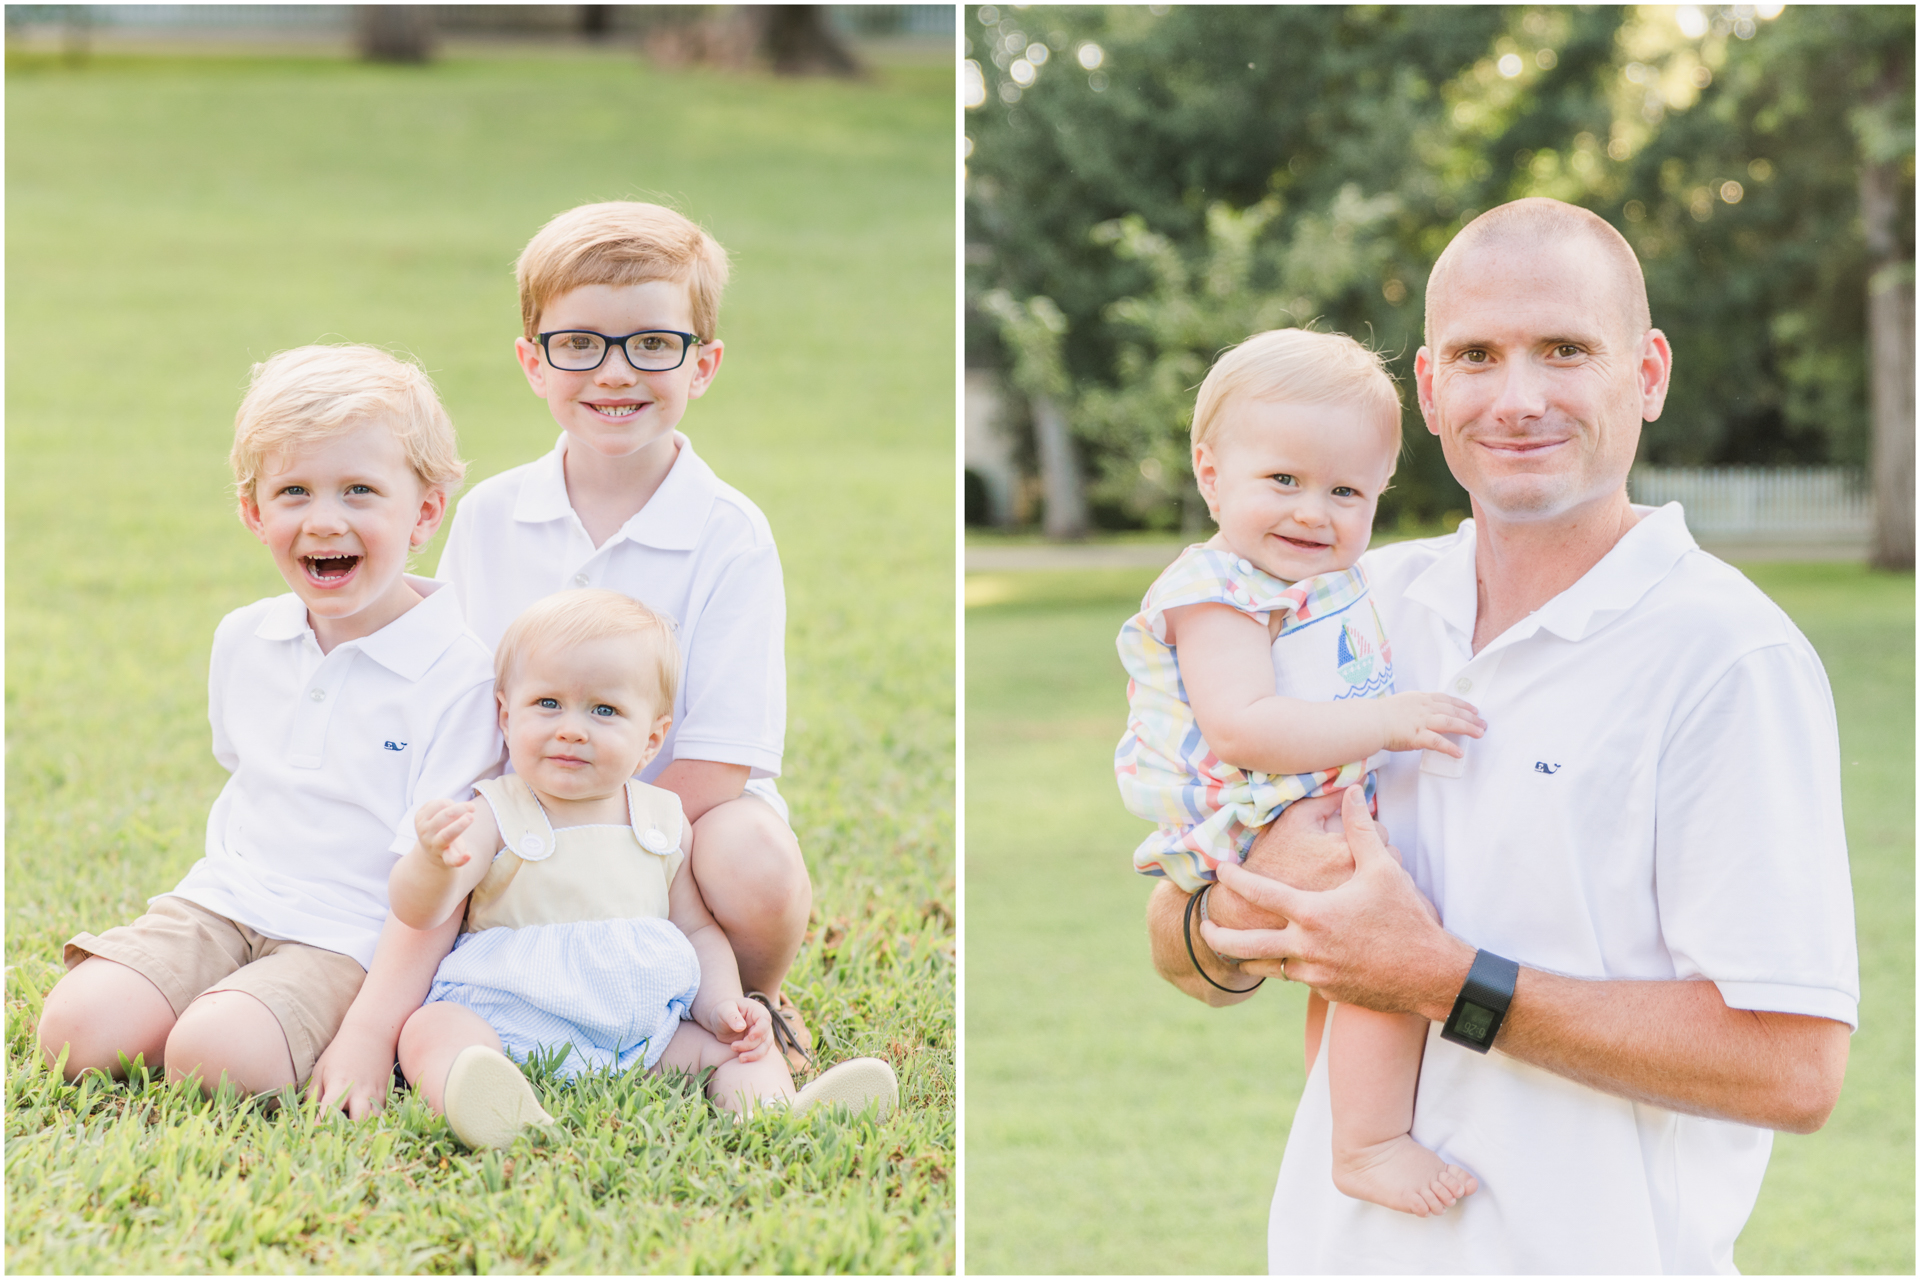 Phillips Family - Boys First Birthday - Huntsville Family Photographer - Mooresville - All boys - Family of Five - 35